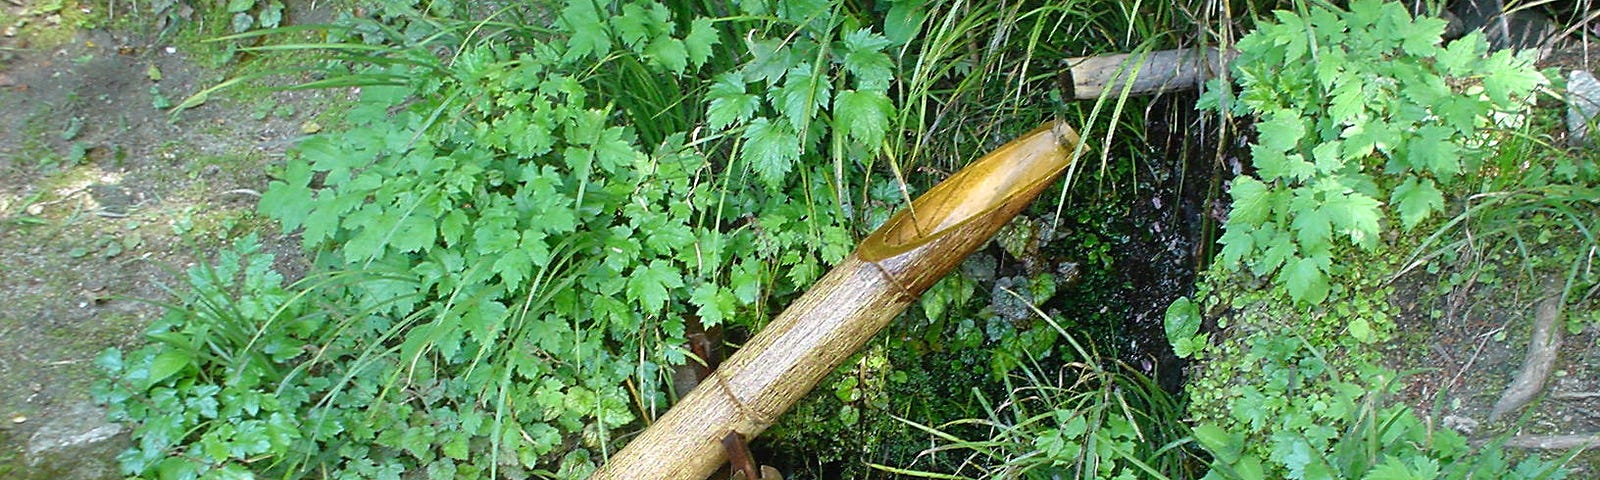 Bamboo near a water inlet among shrubs